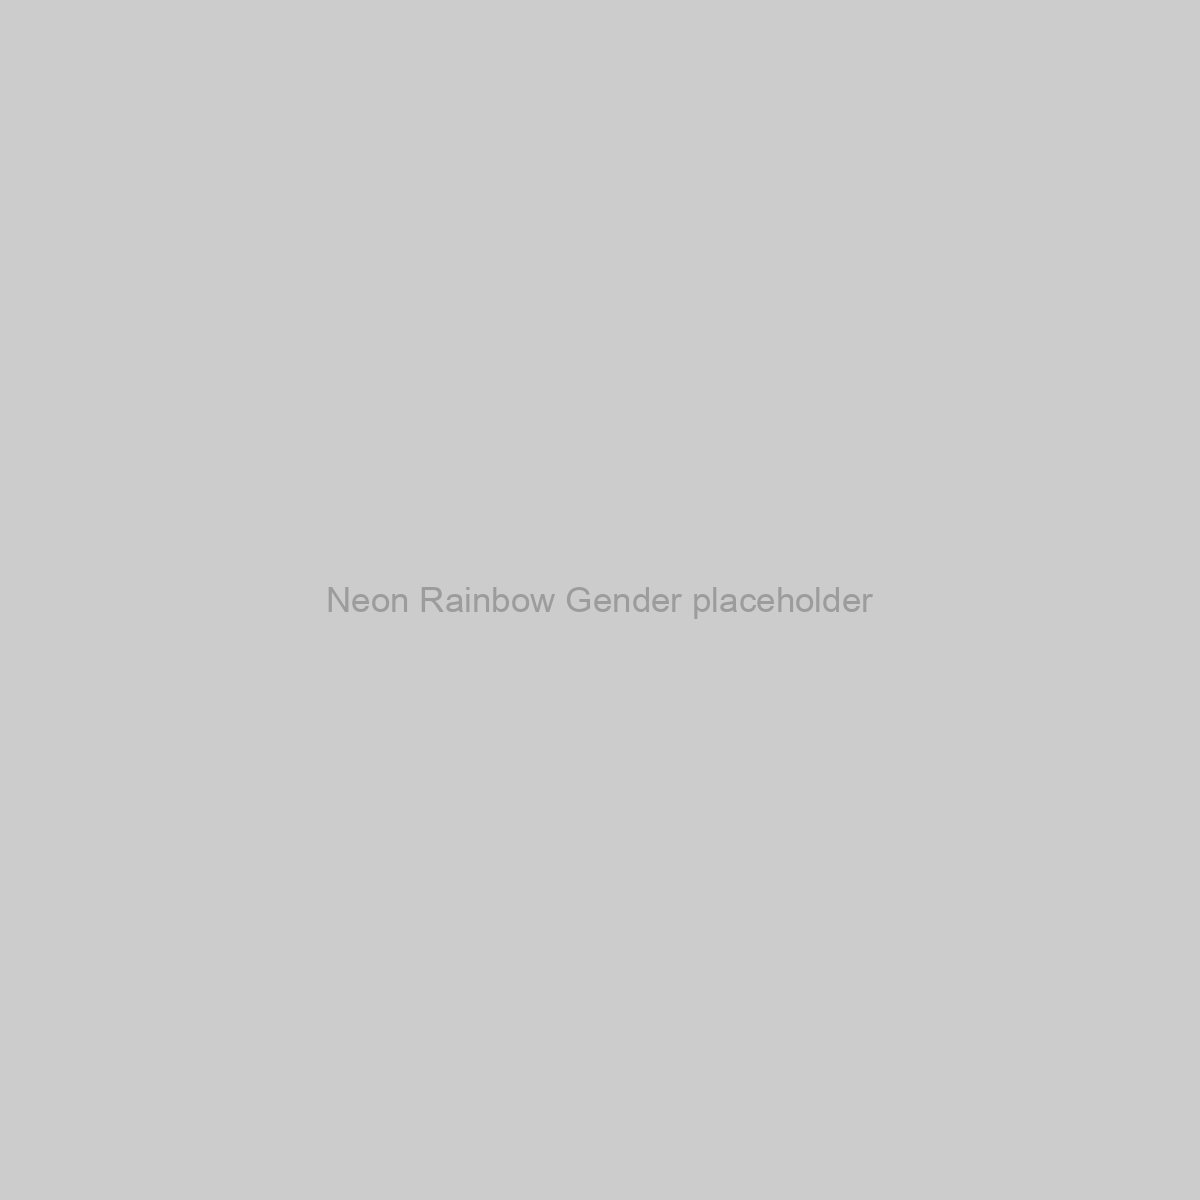 Neon Rainbow Gender Placeholder Image